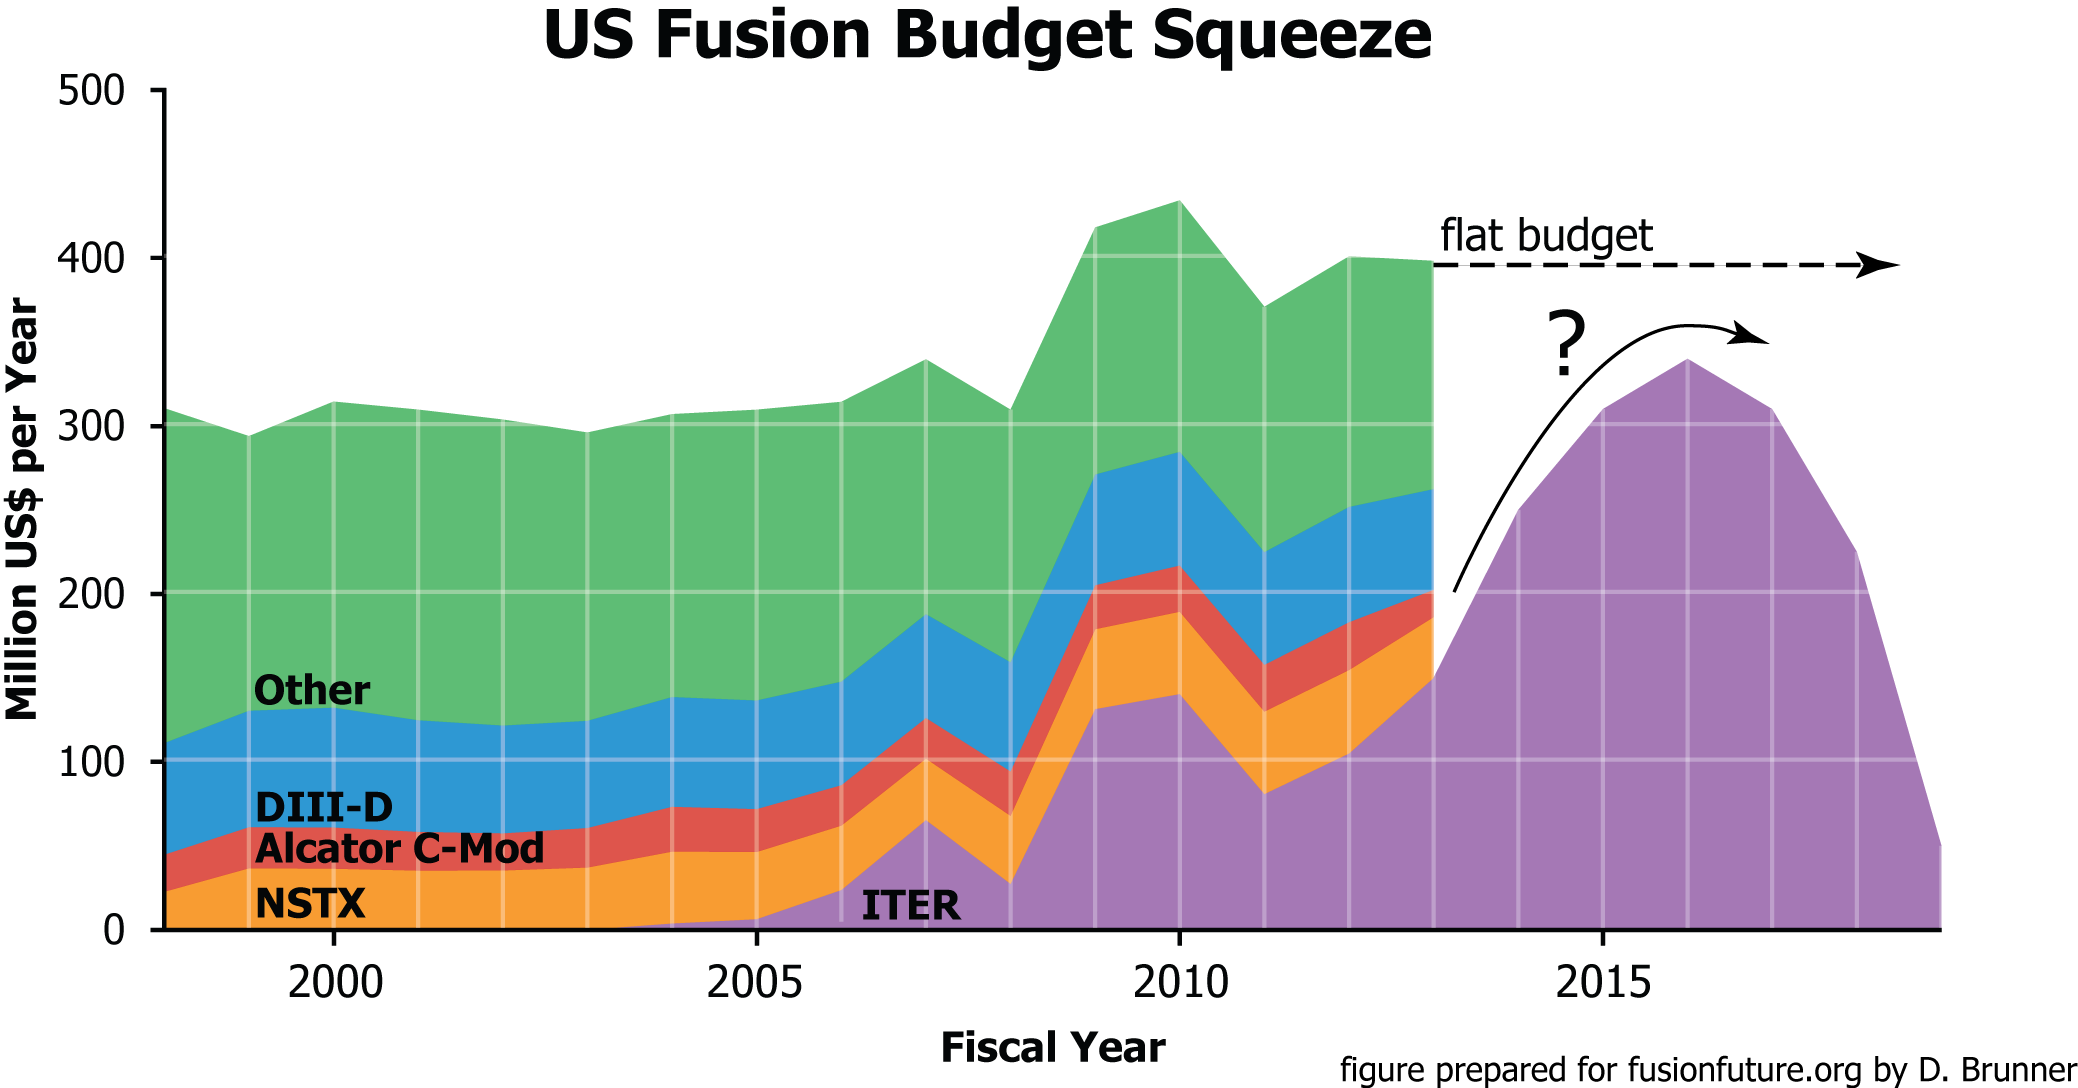 A Tough Budget for Fusion